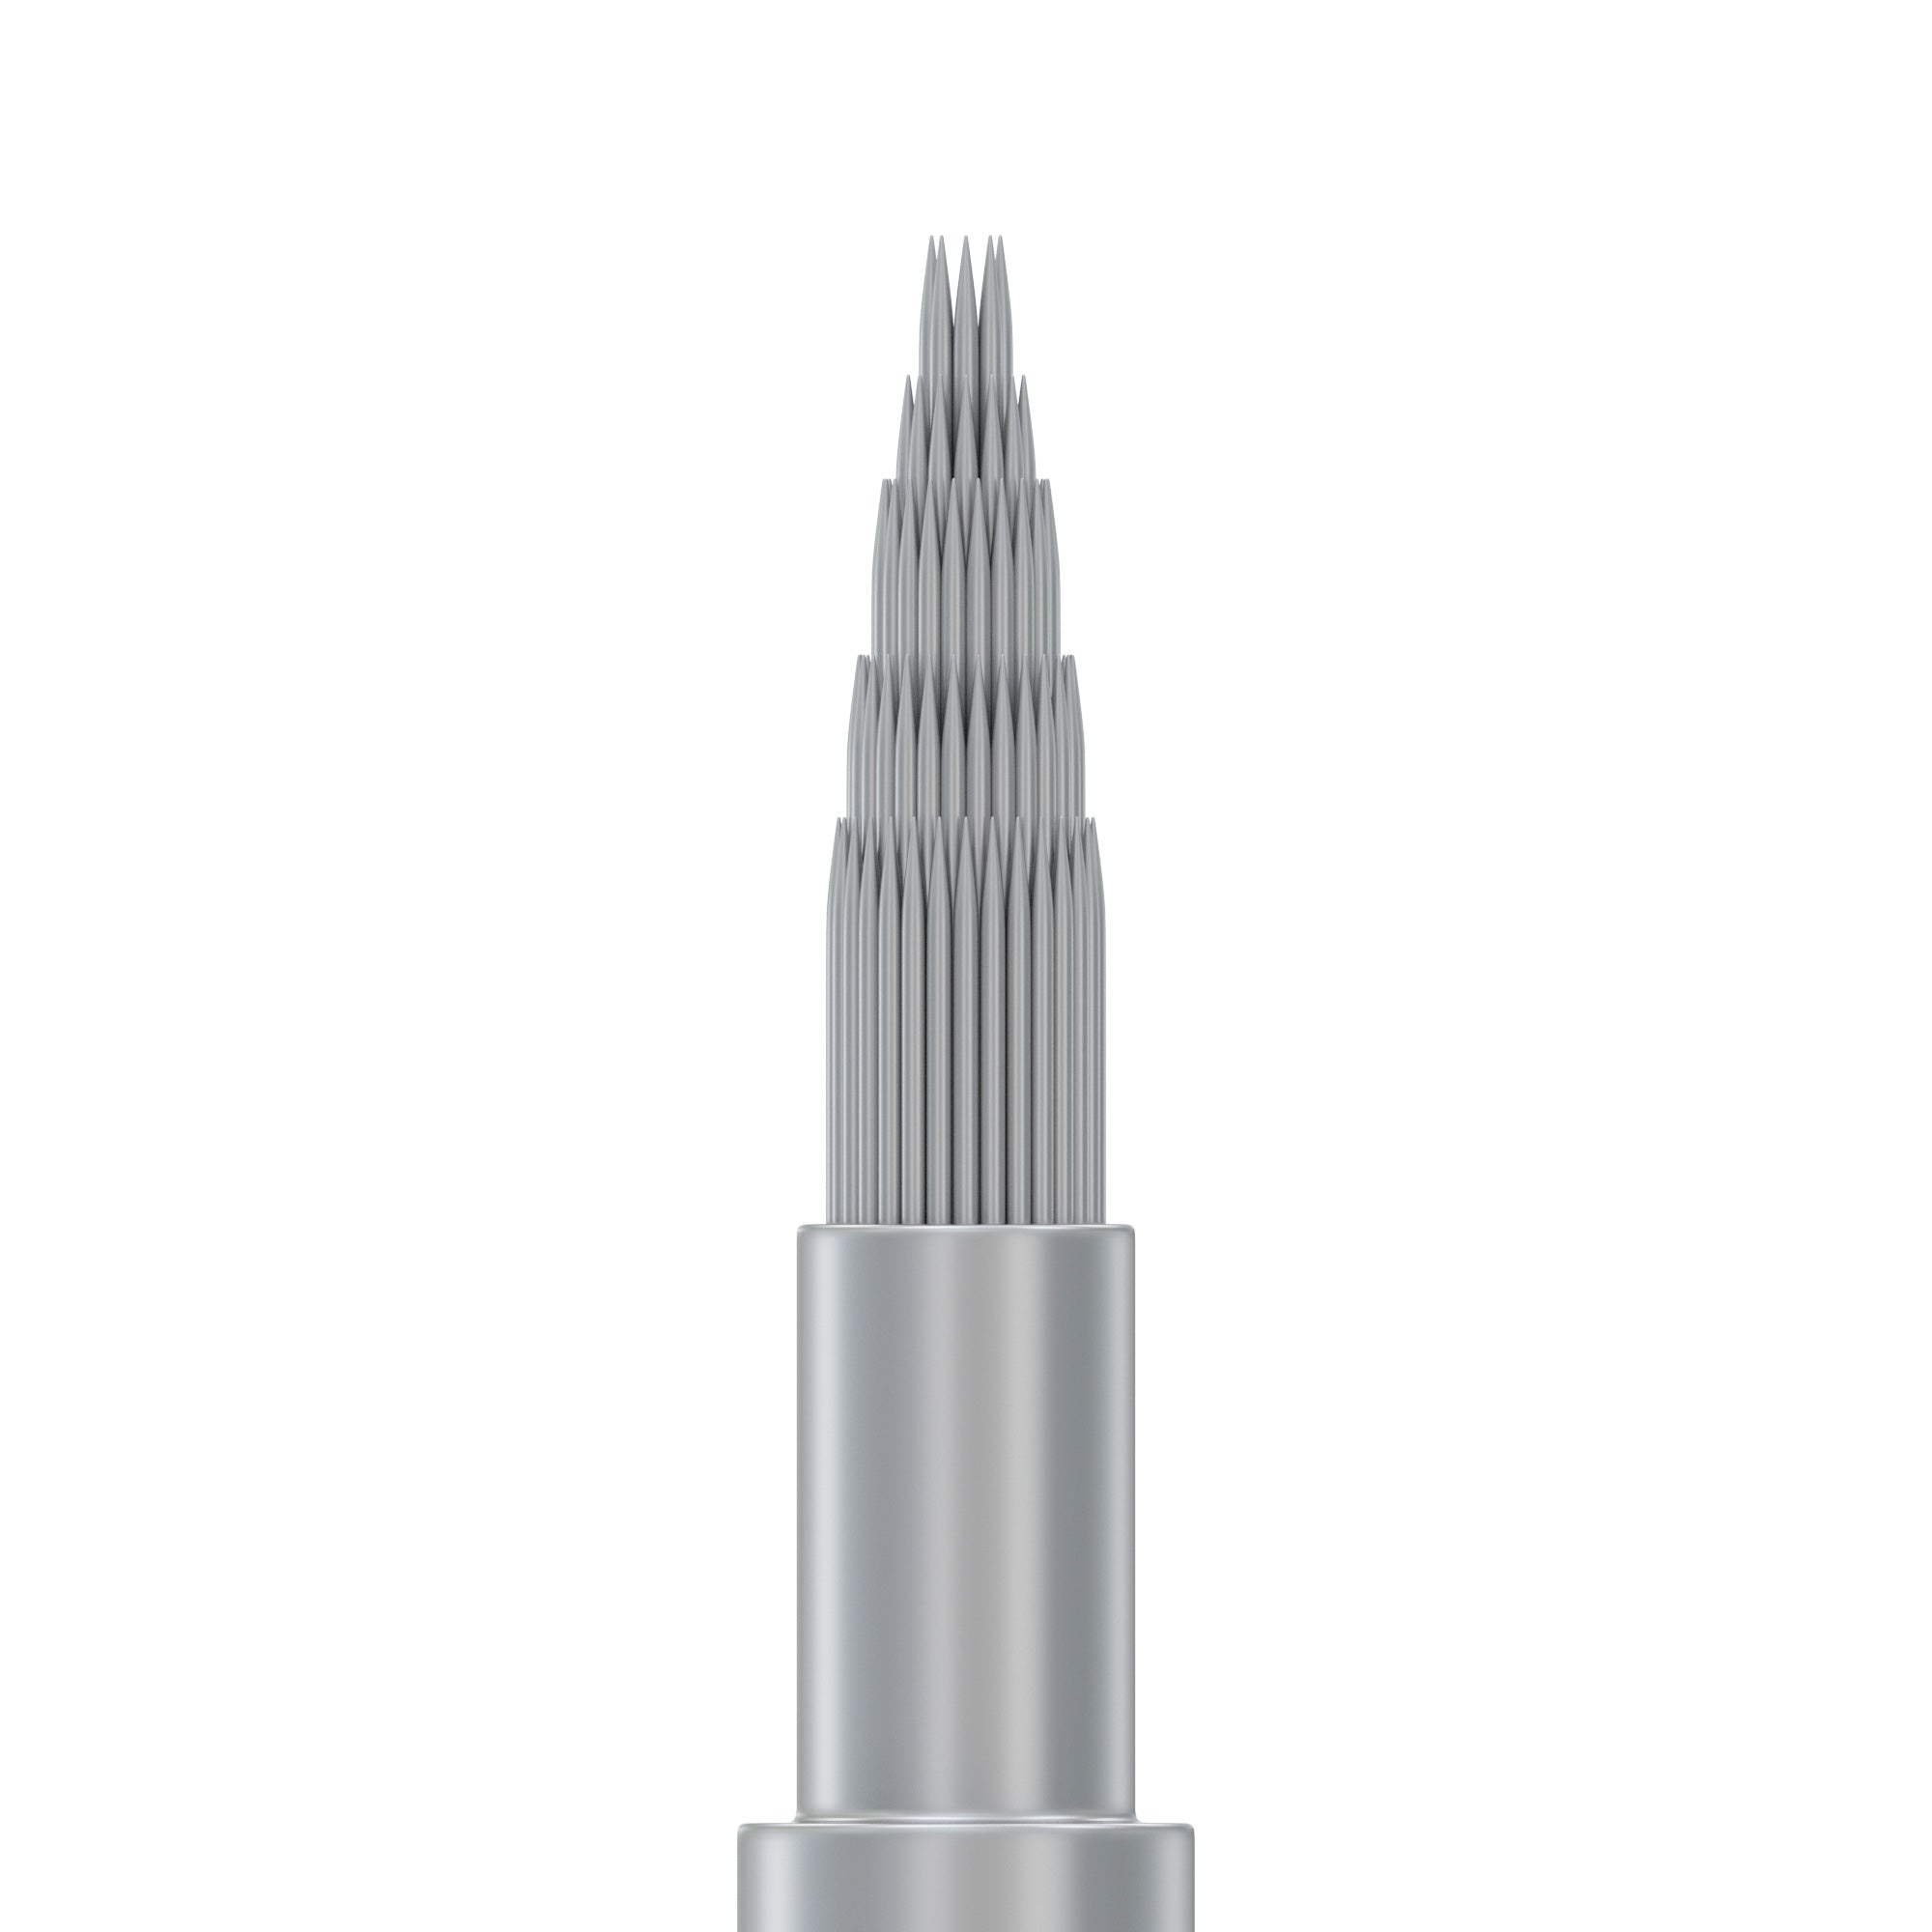 DSI Peri-implantitis NiTi Brush For Implant Surface Debridement Removal